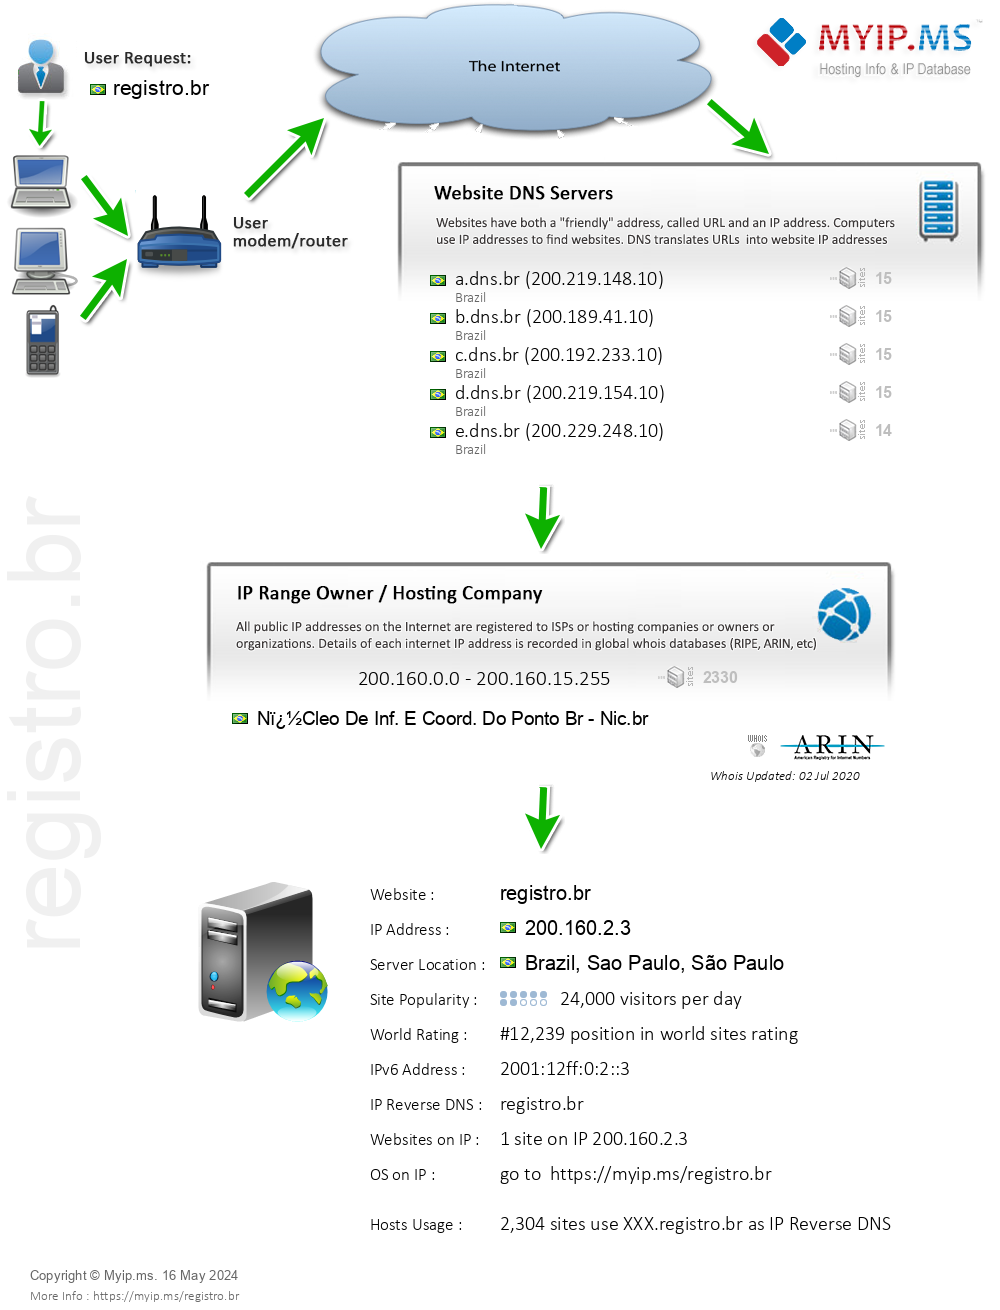 Registro.br - Website Hosting Visual IP Diagram